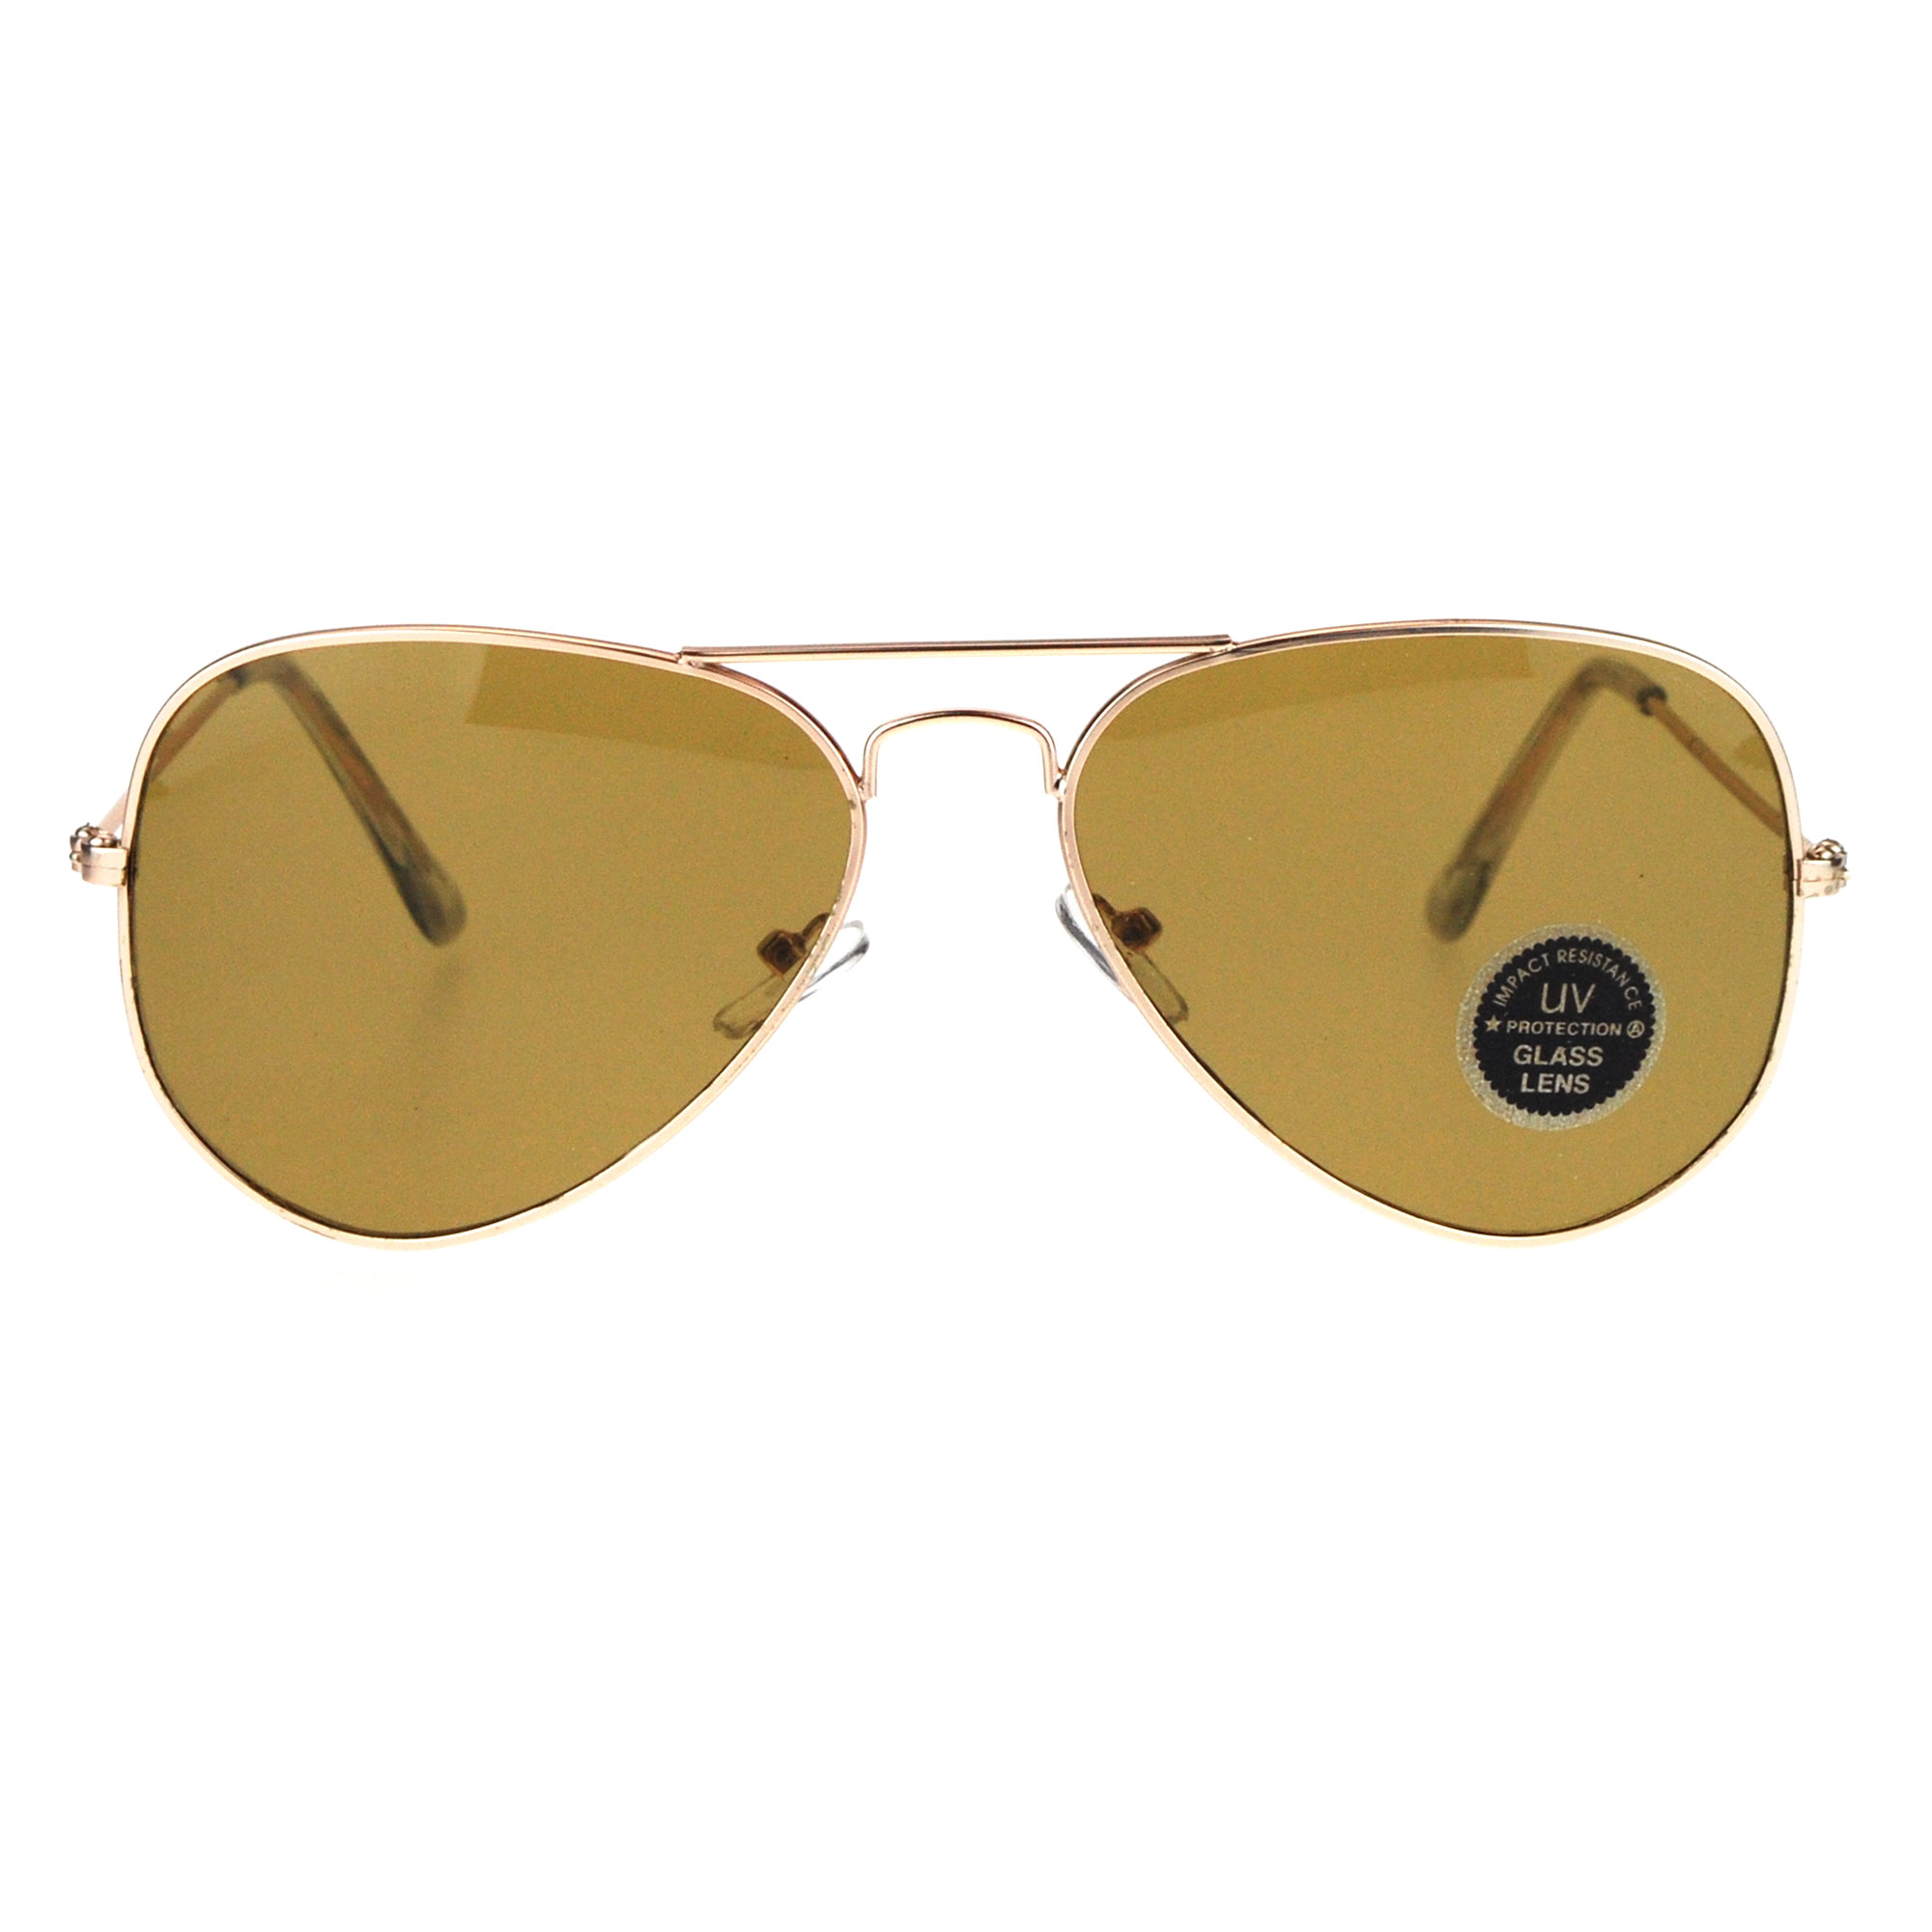 Mens Tempered Glass Lens Metal Wire Rim Classic Police Aviator Sunglasses Ebay